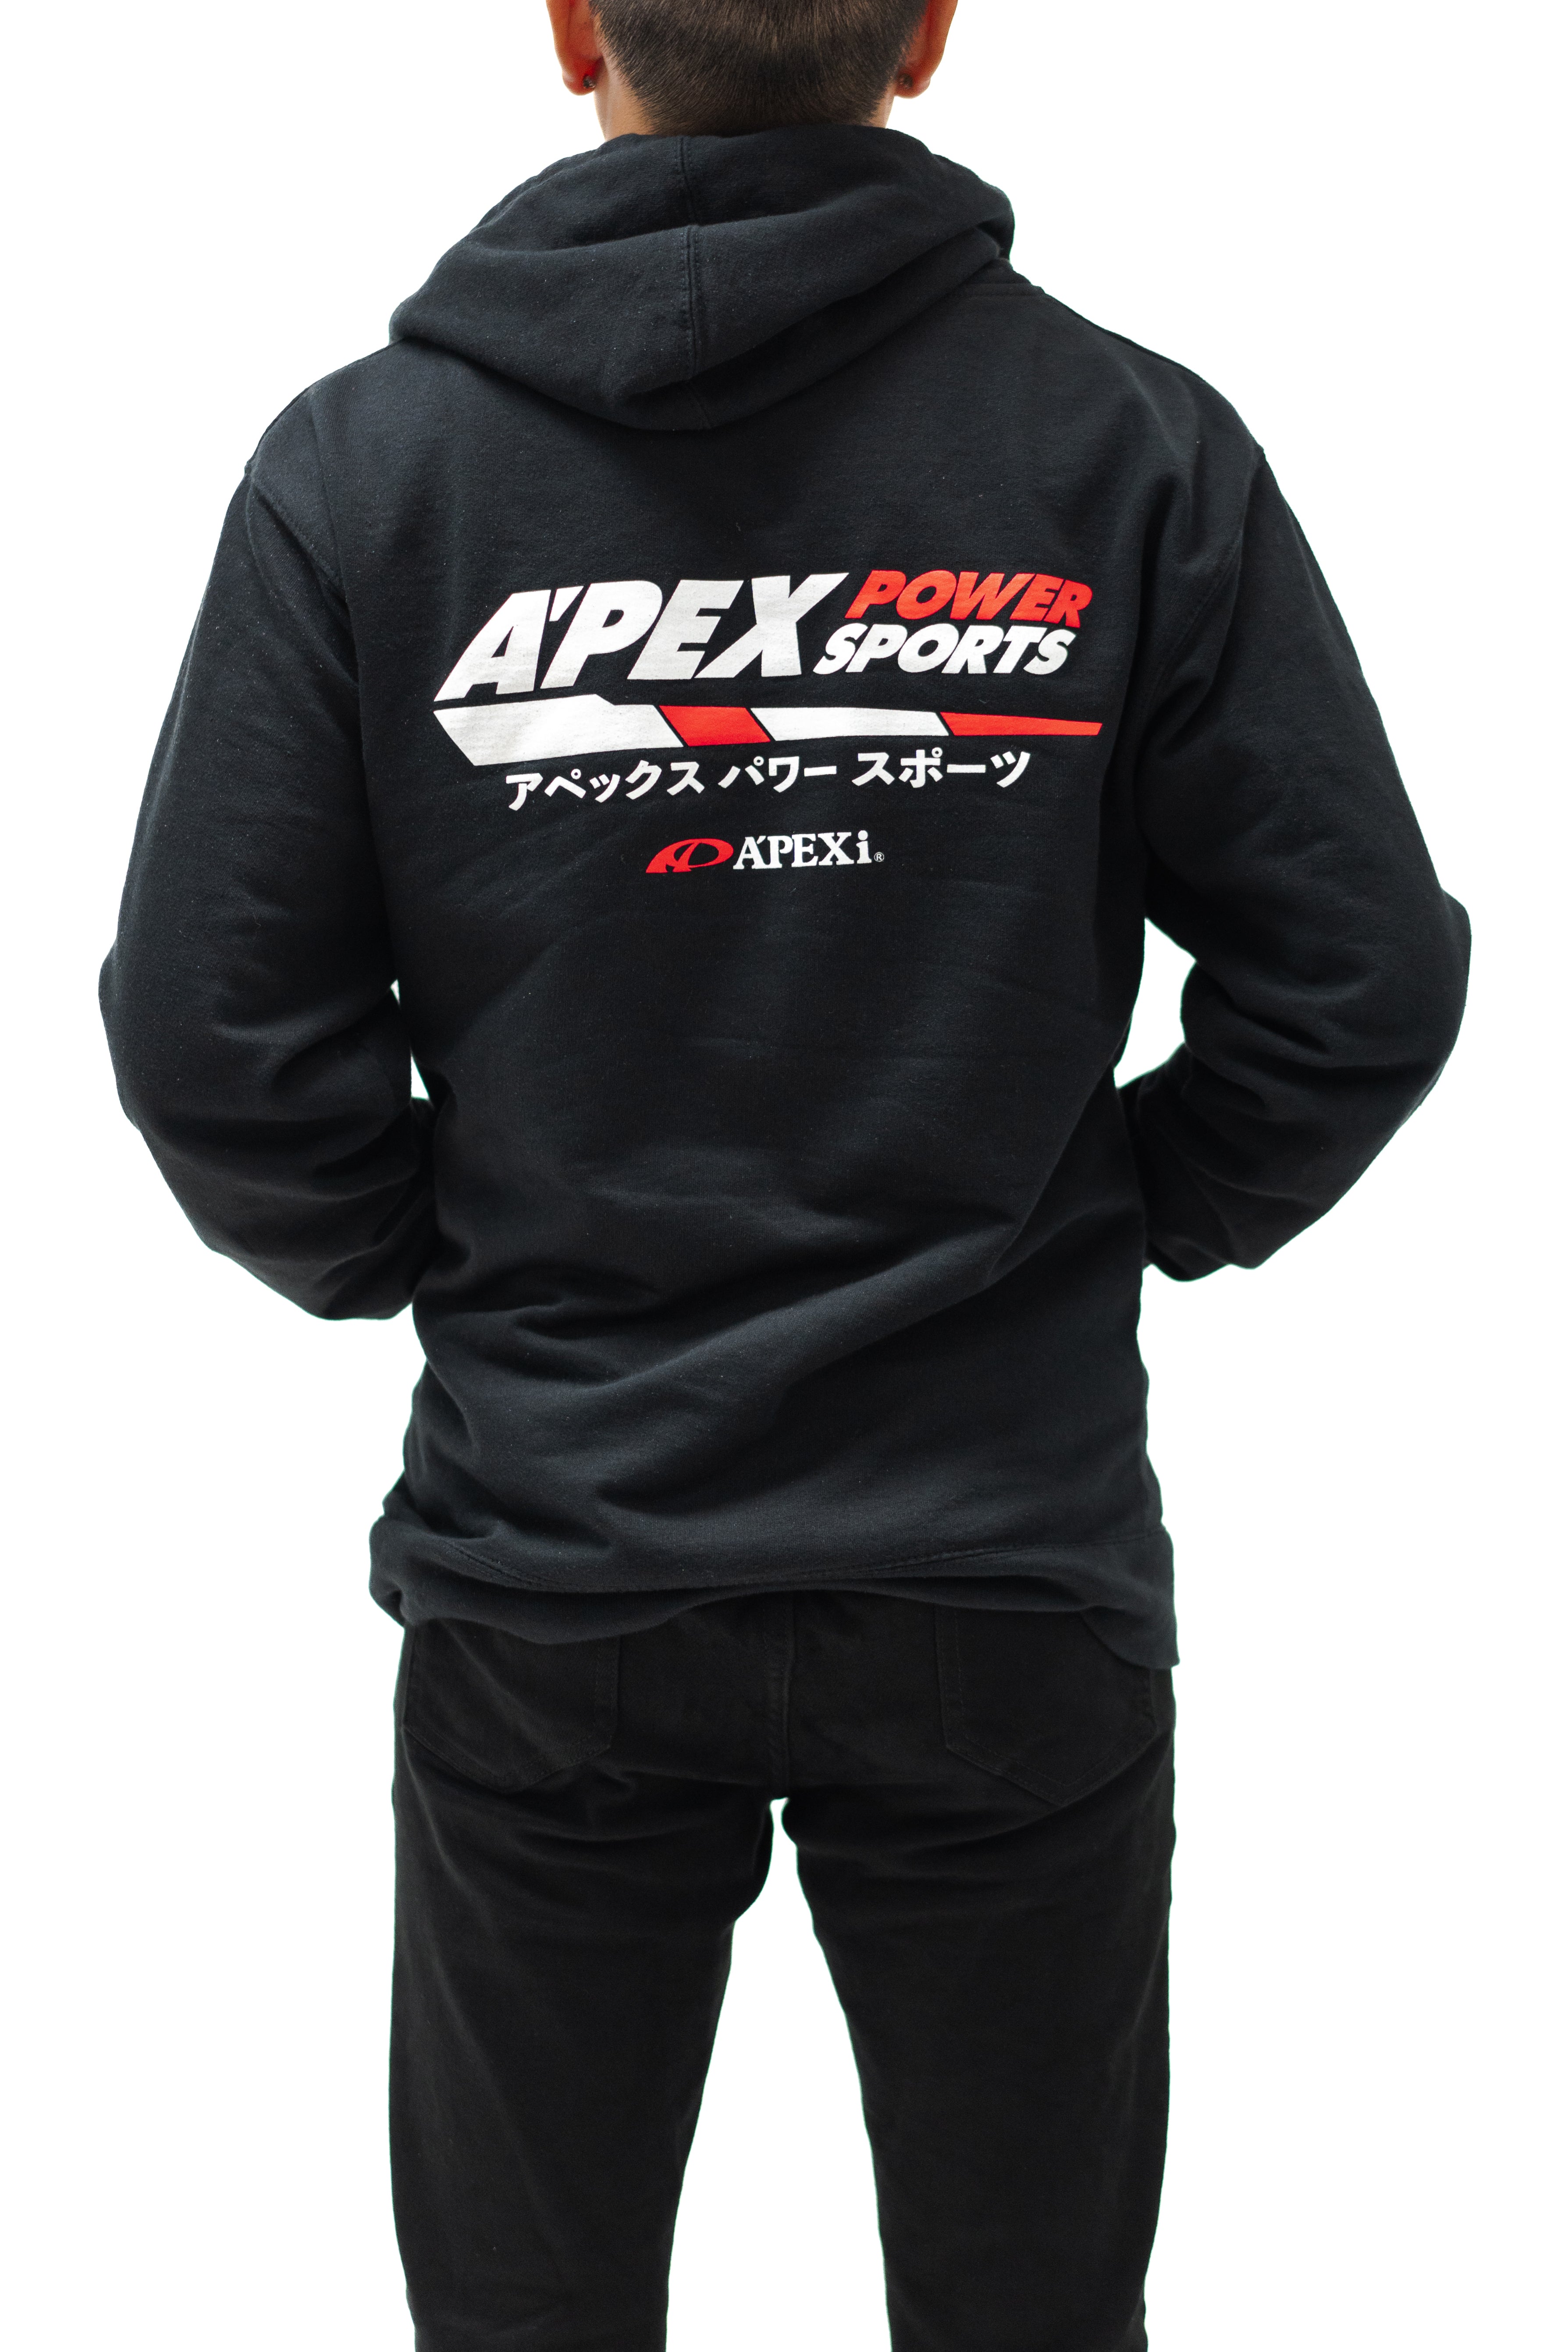 A'PEXi - APEX Power Sports Zip-Up Hoodie-1